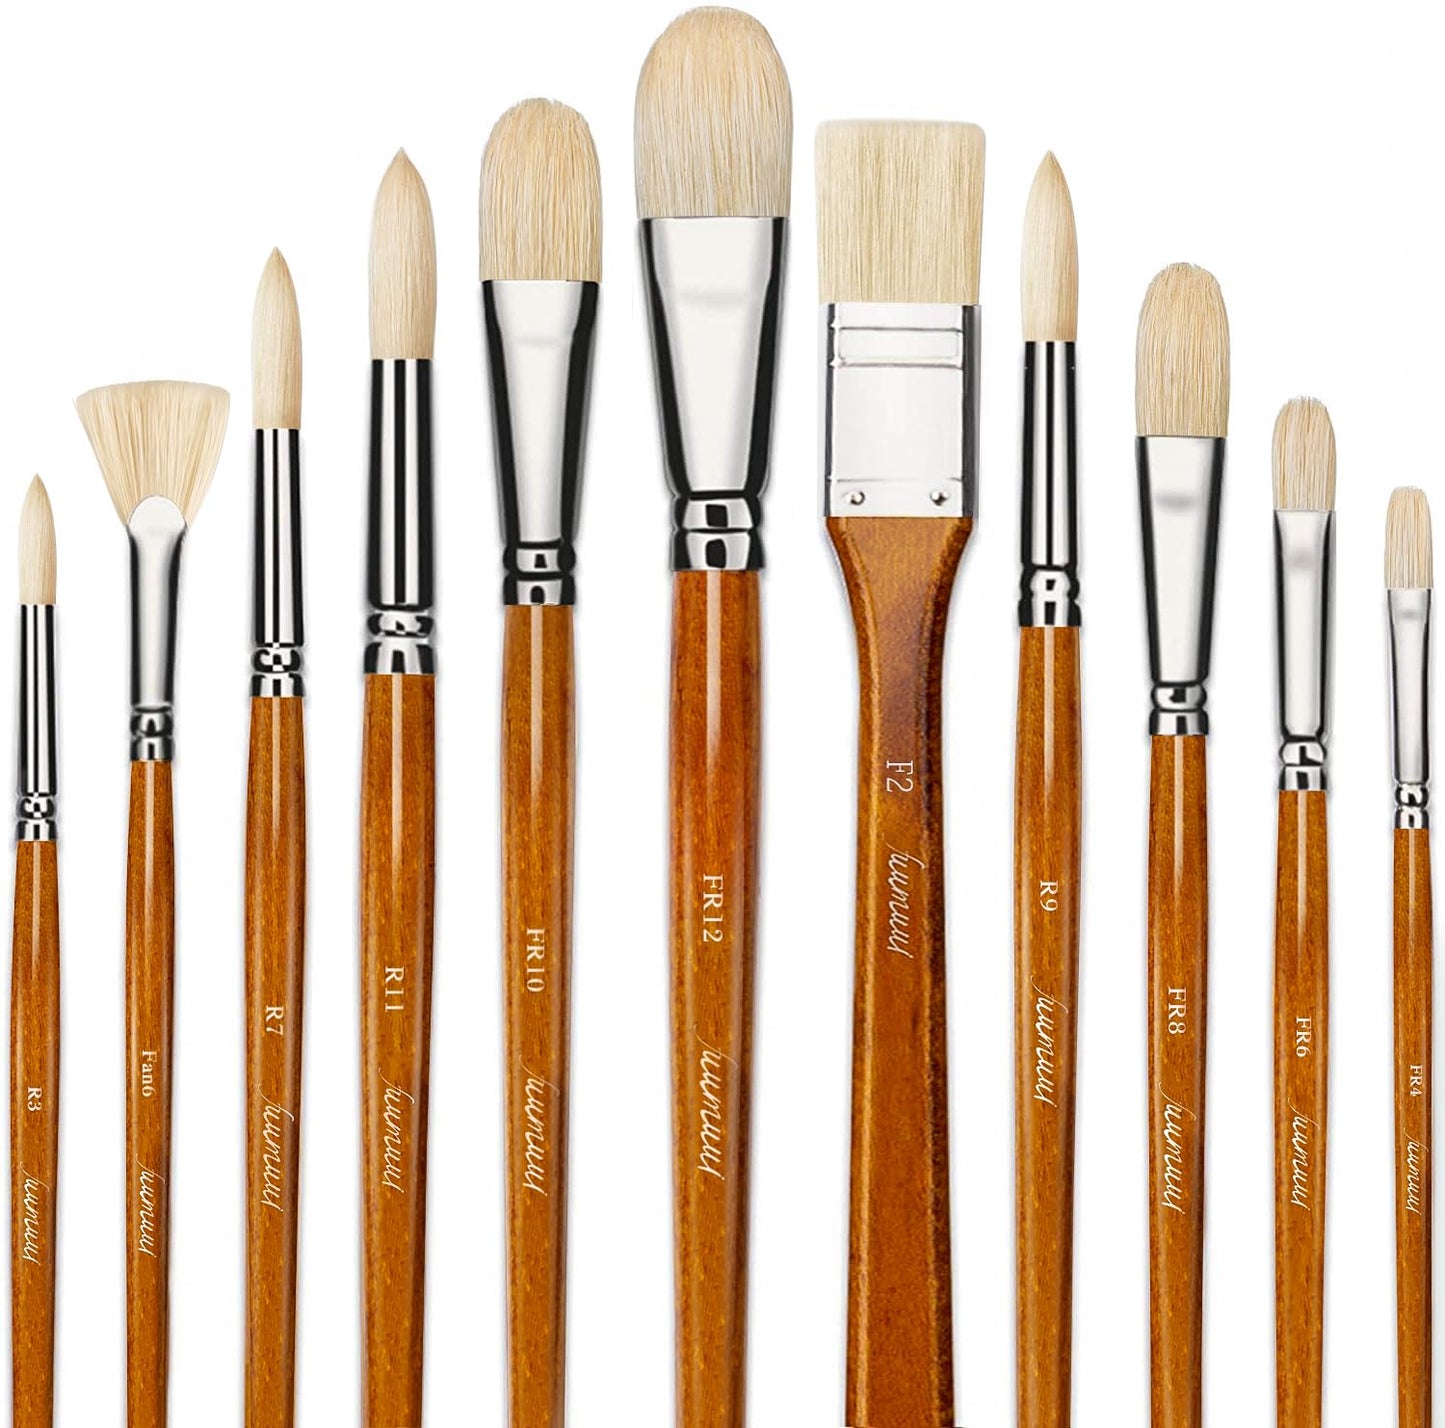  Miniature Paint Brushes, Fuumuui 11pcs Fine Detail Paint Brush  Set Citadel Model Paint Brushes for Acrylic Painting on Canvas, Watercolor,  Oil, Model Painting